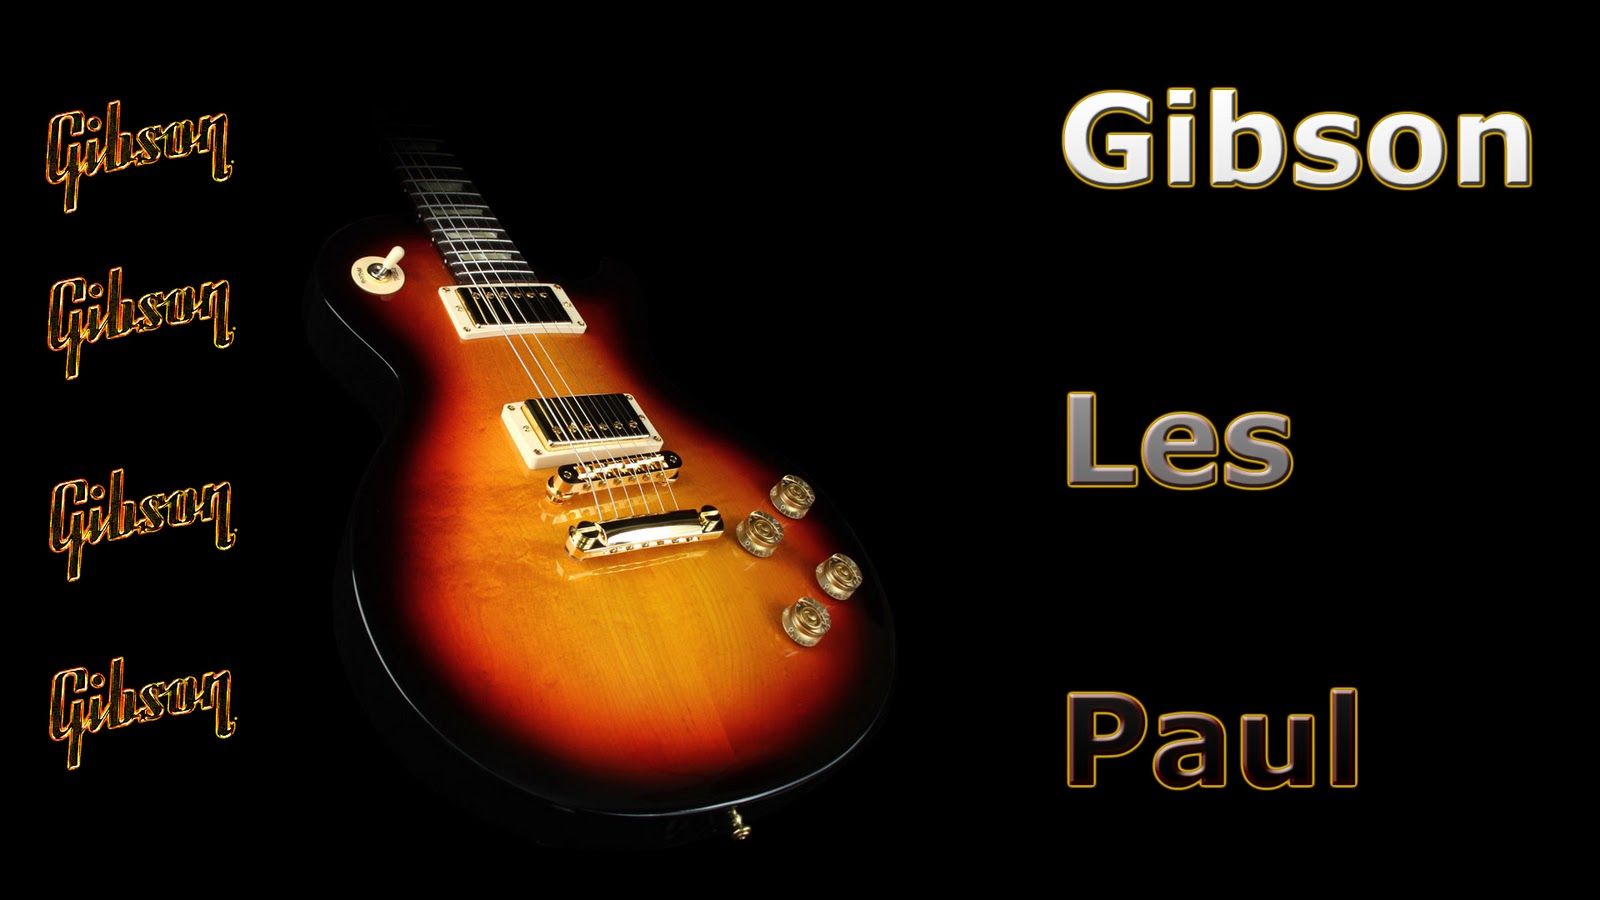 Great Guitar Sound: Guitar Wallpaper Gibson Les Paul Electric Guitar Fireburst Gold Hardware 1920x1080